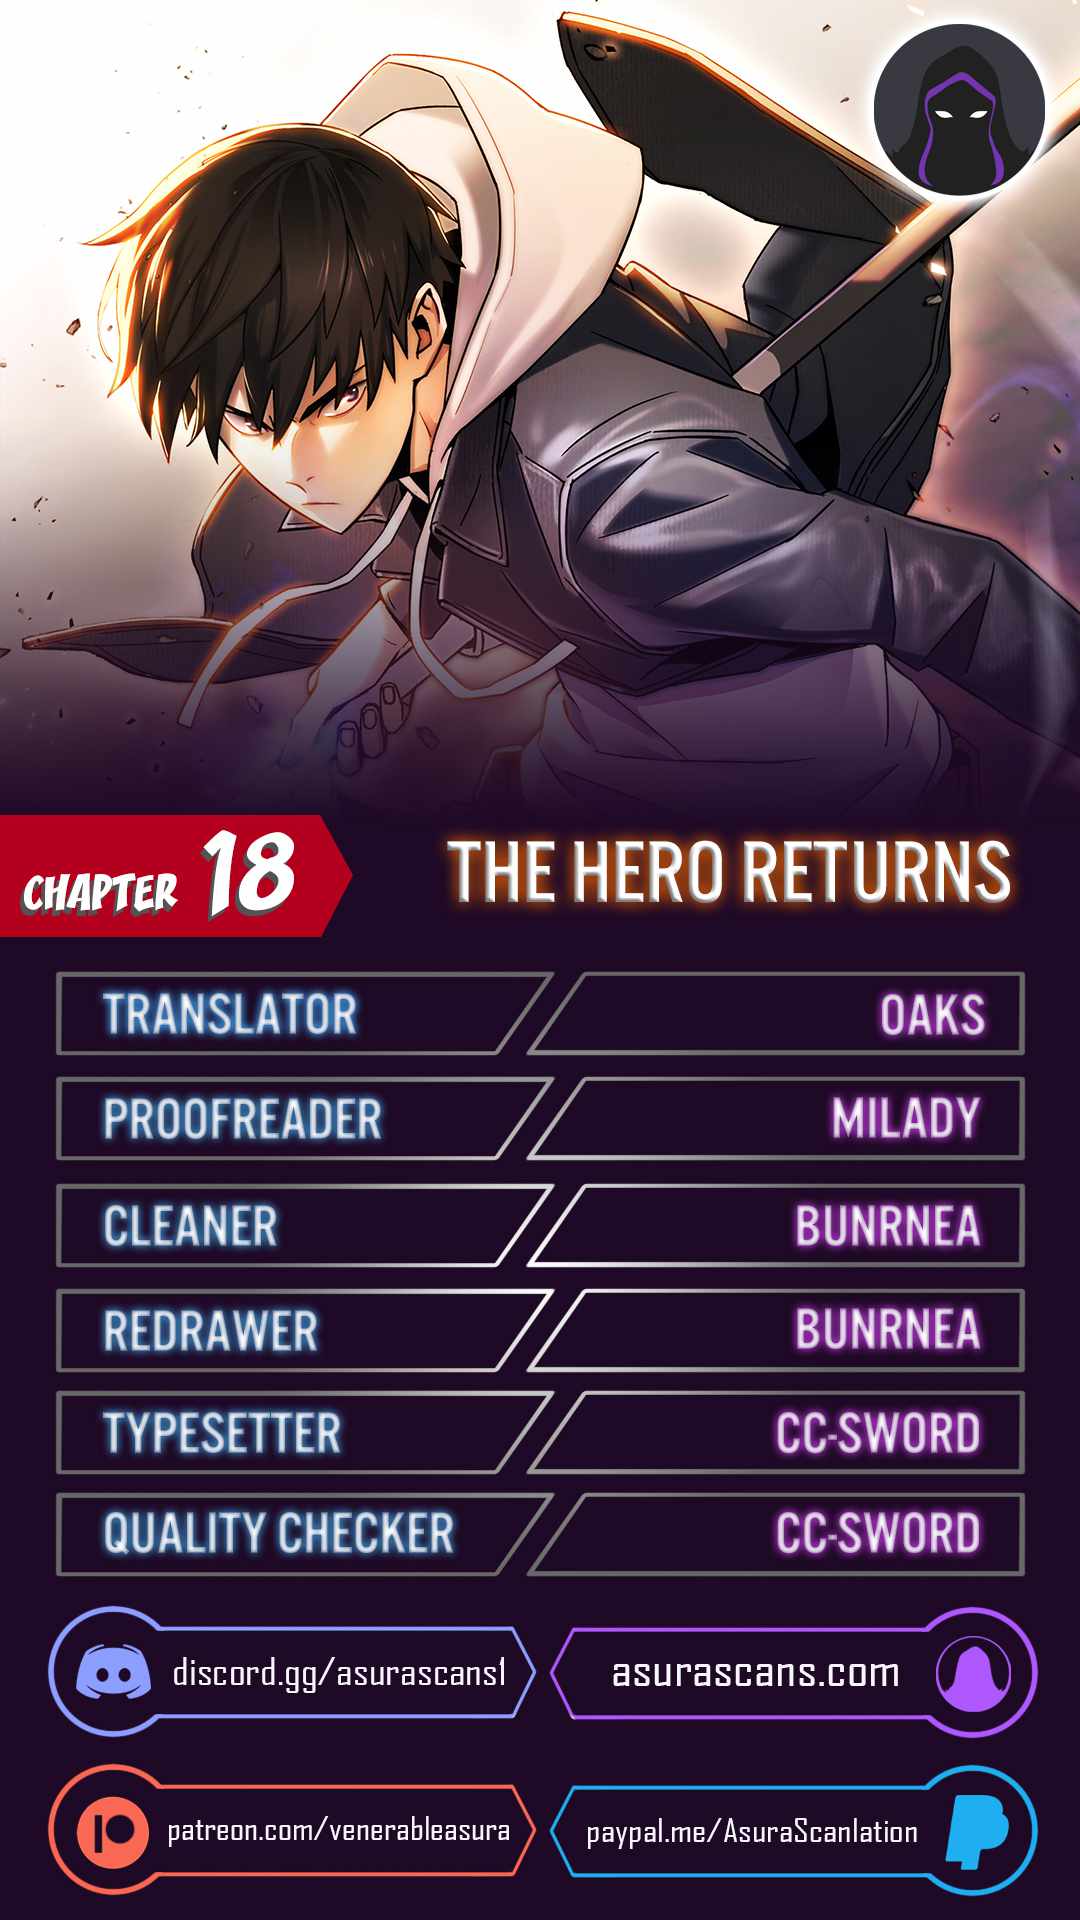 The Hero Returns chapter 18